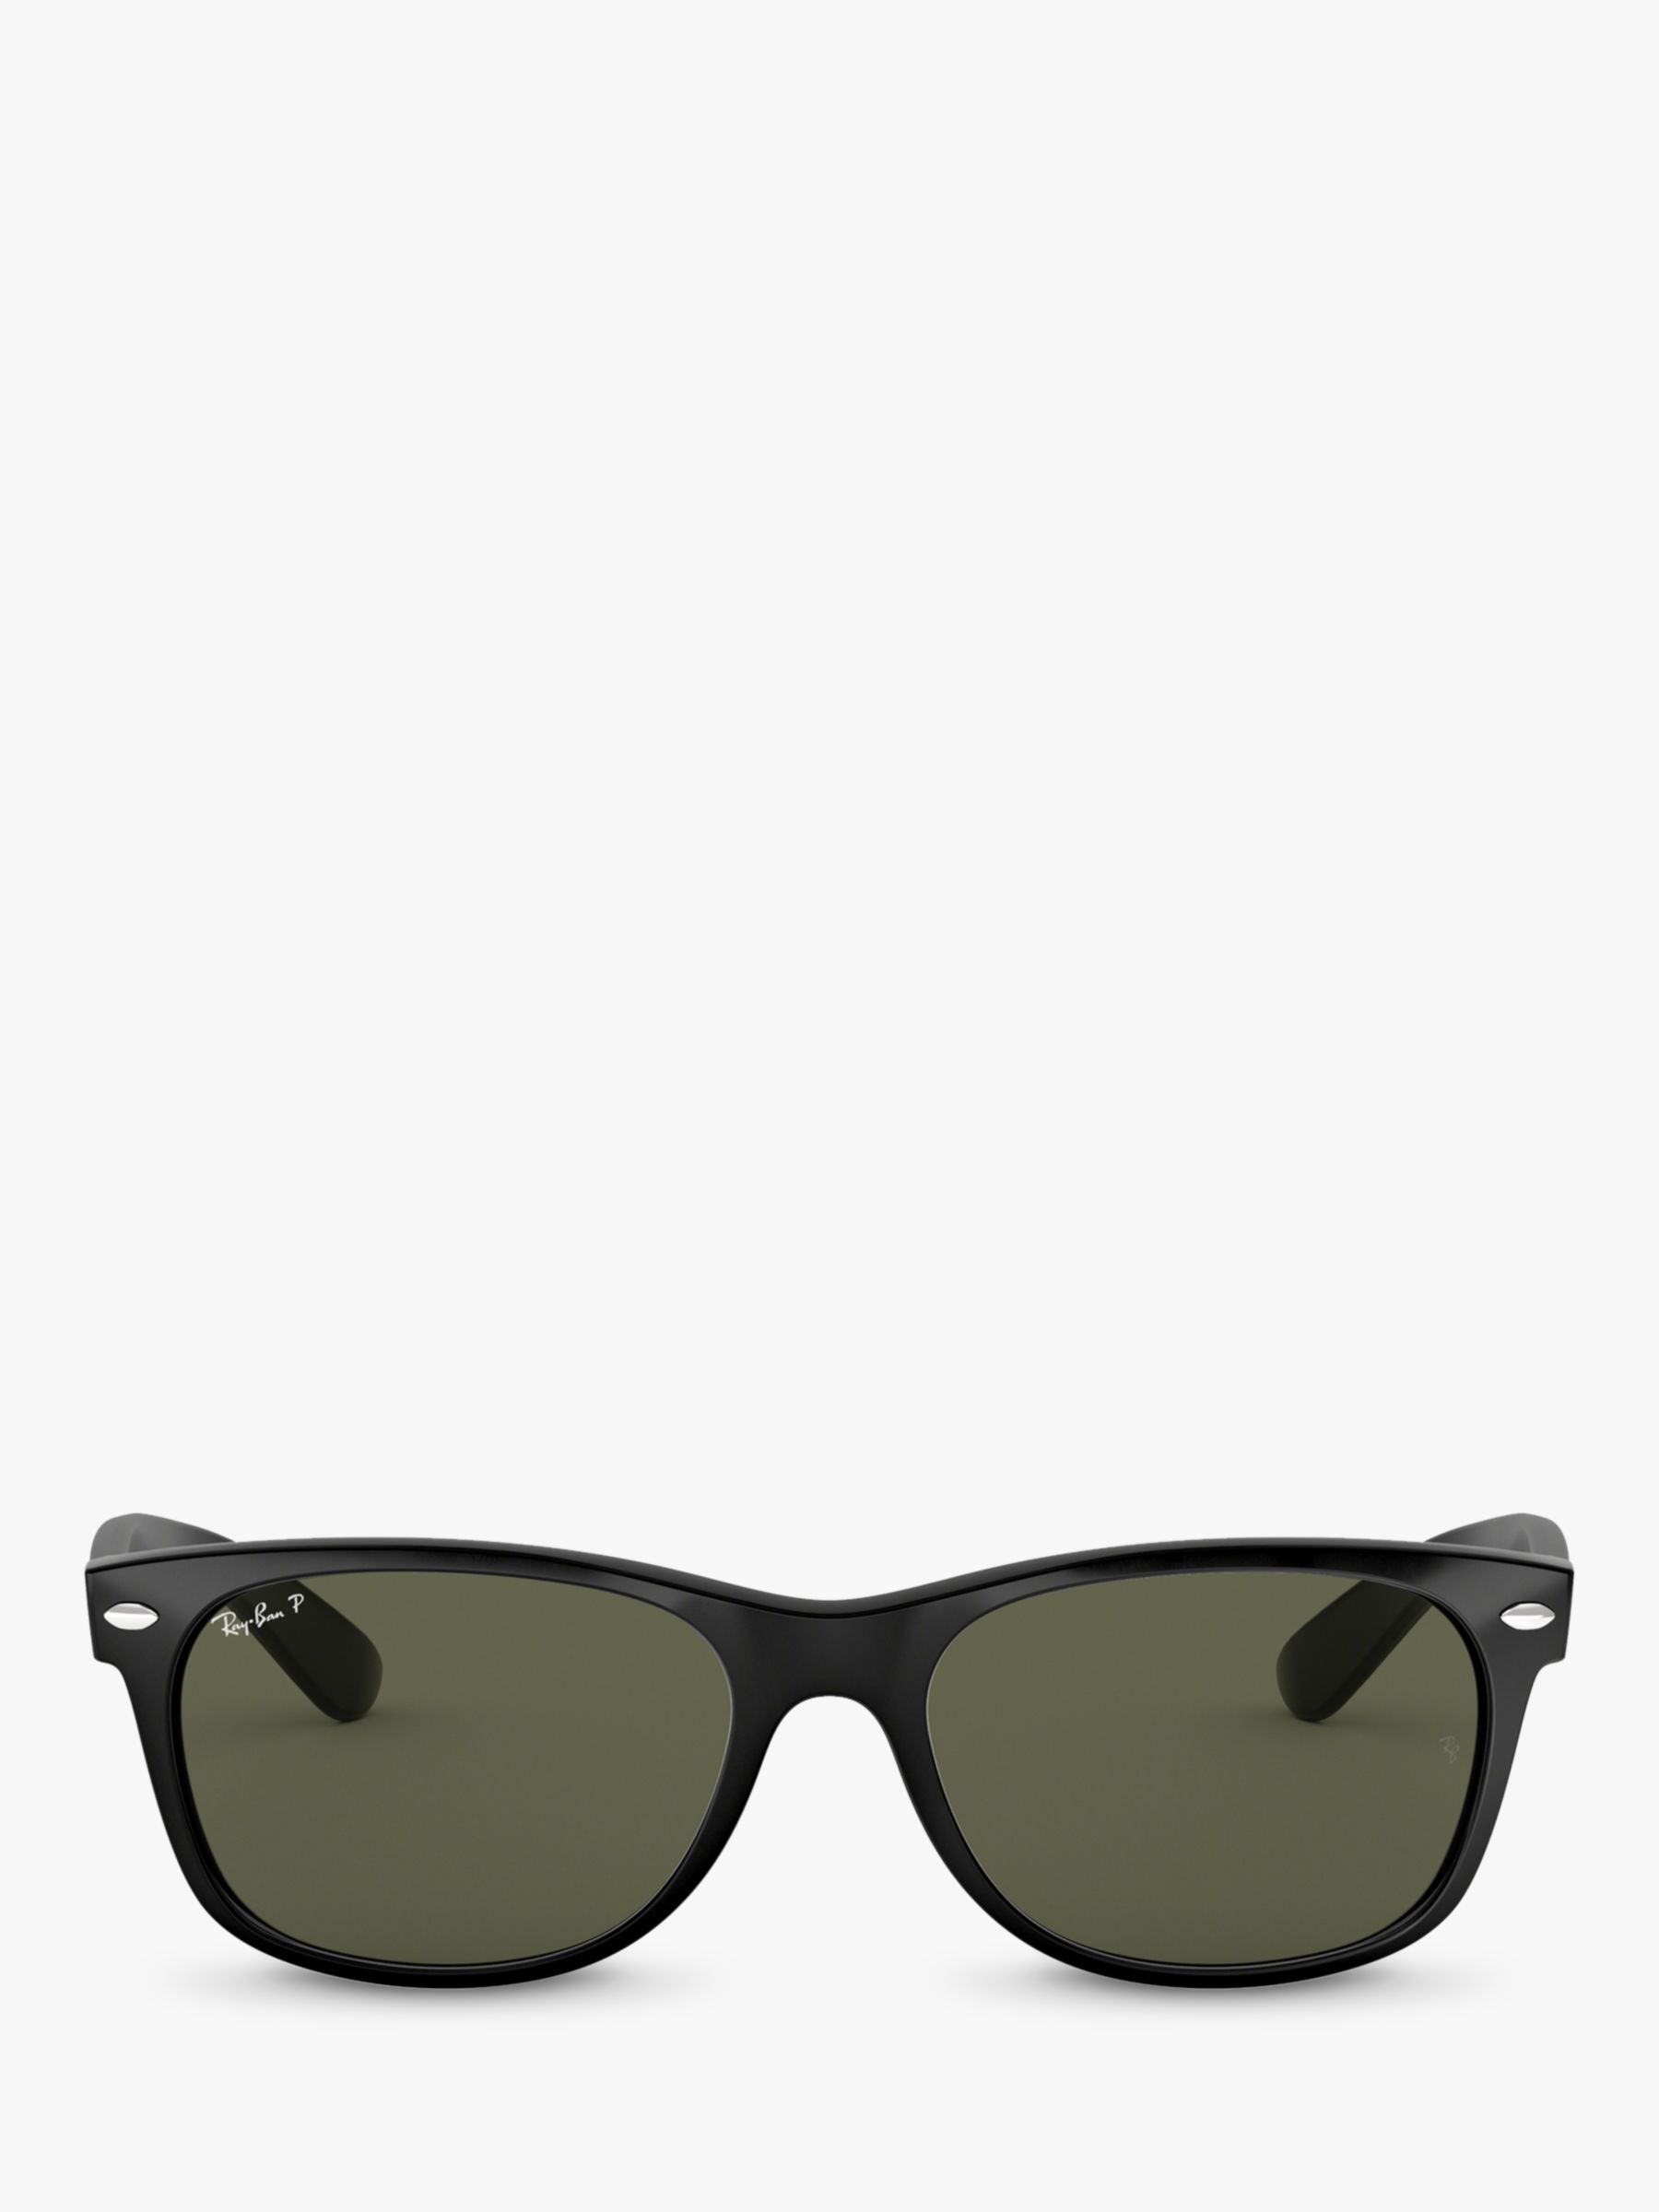 Ray-Ban RB2132 Wayfarer Polarised Sunglasses, Black at John Lewis u0026 Partners